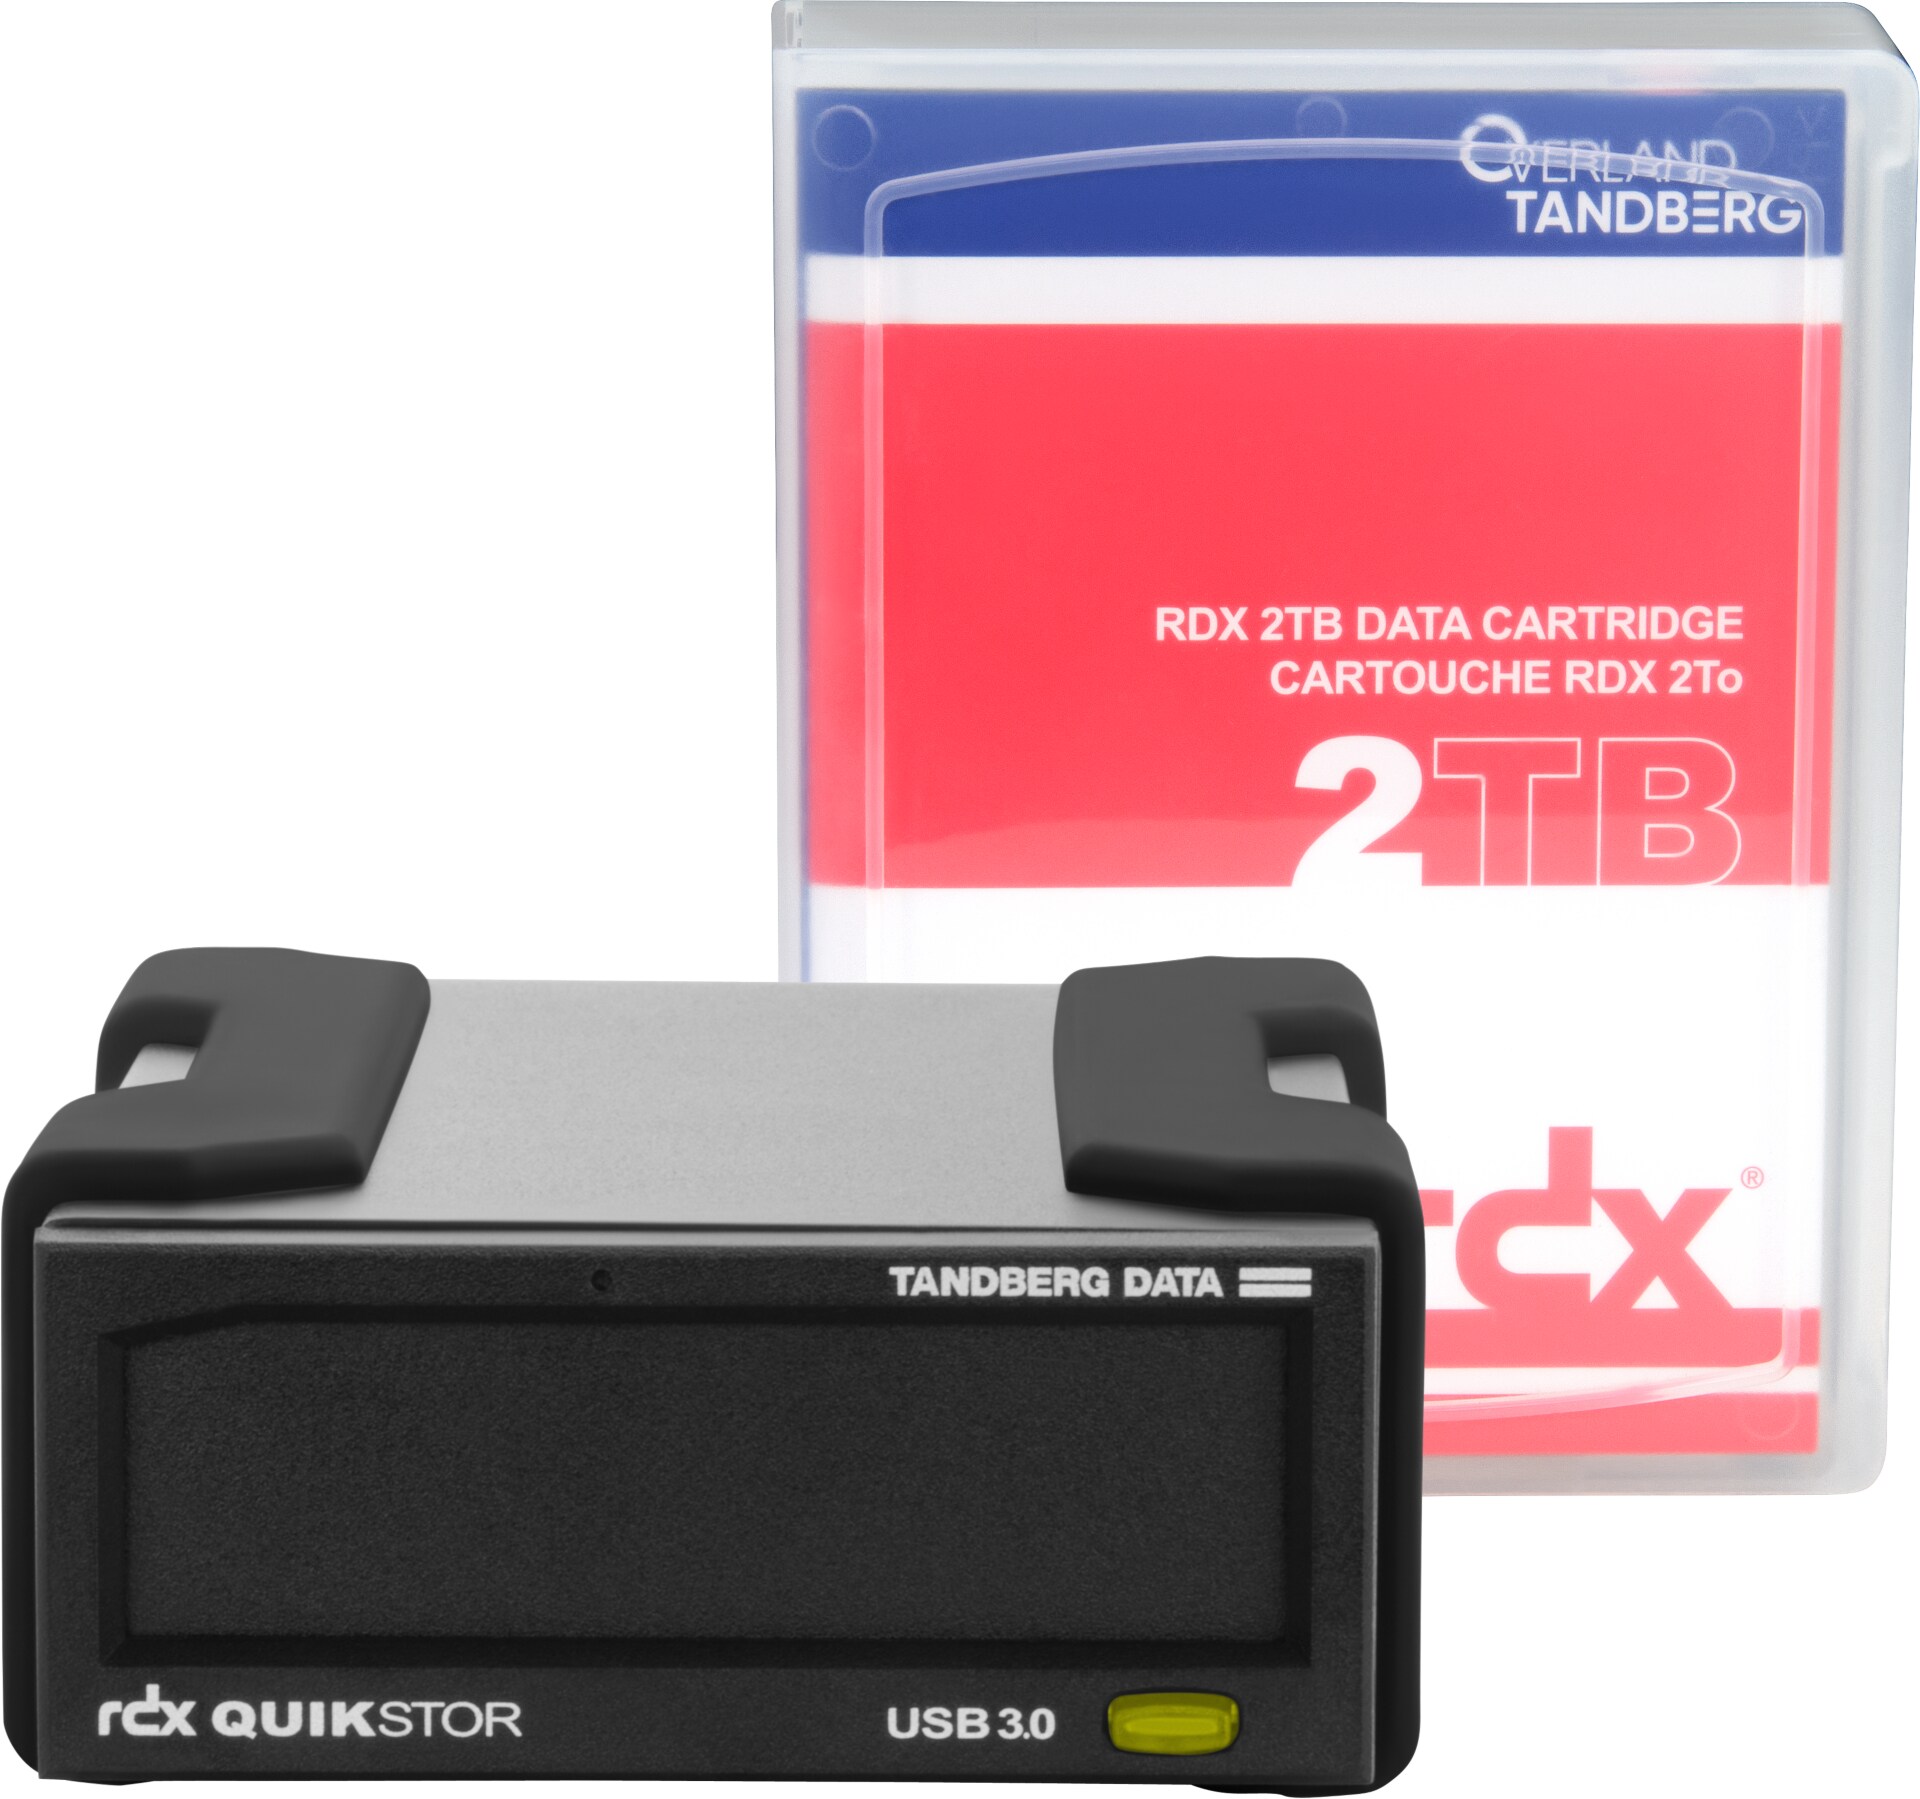 Overland Tandberg RDX QuikStor - RDX drive - SuperSpeed USB 3.0 - external - with 2 TB Cartridge